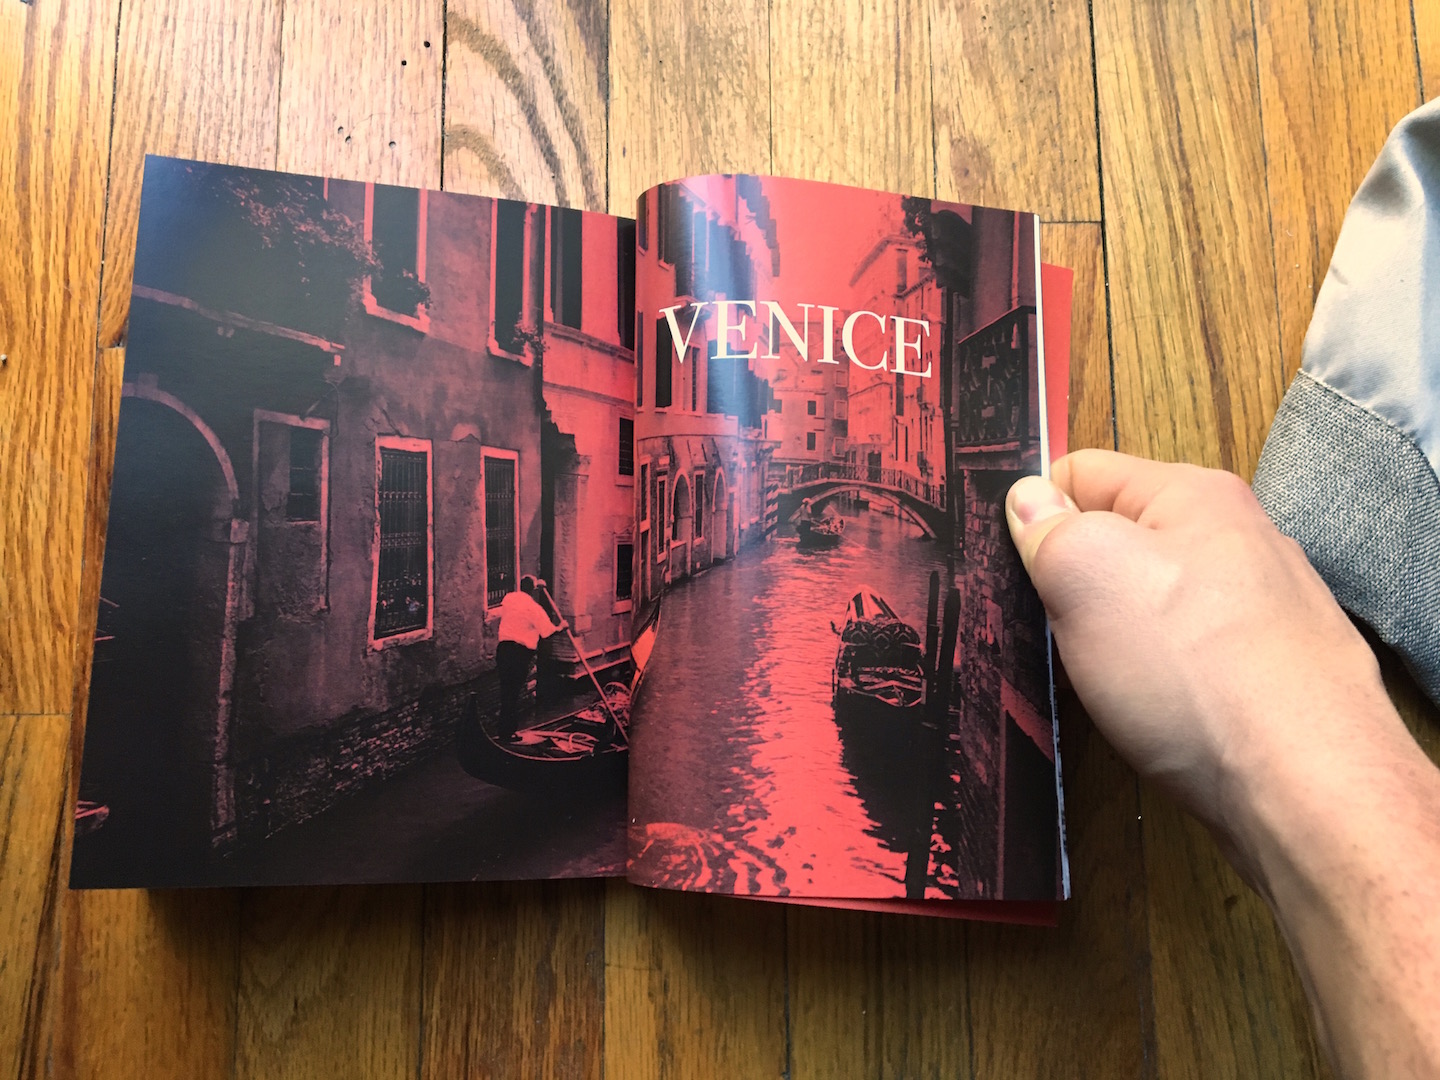 venice title page